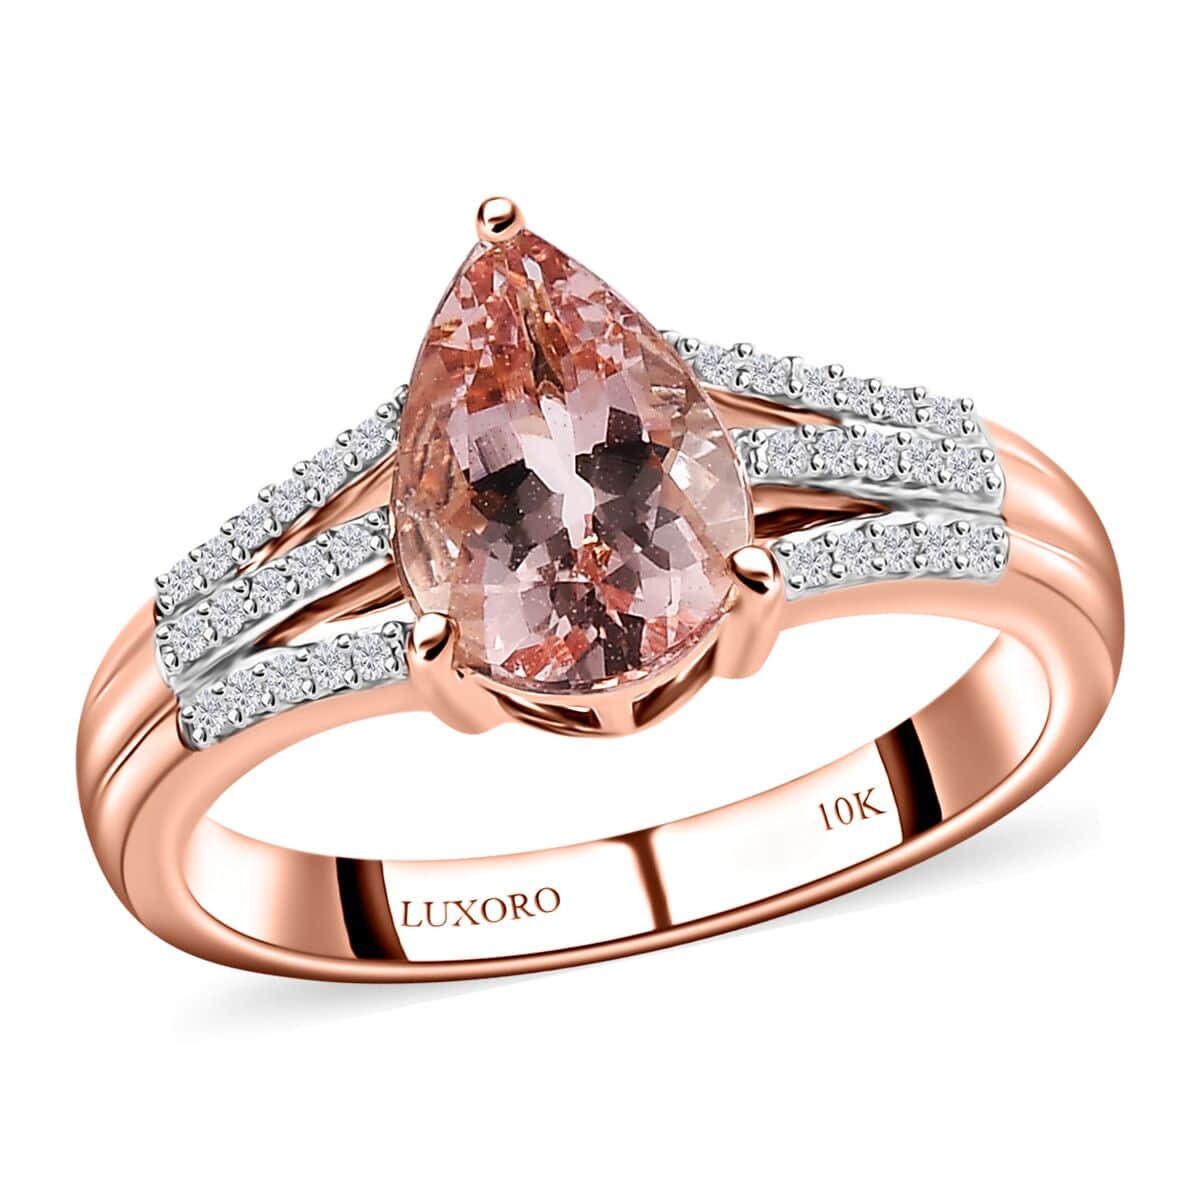 Luxoro 10K Rose Gold Premium Pink Morganite and Diamond Ring (Size 6.0) 1.75 ctw image number 0